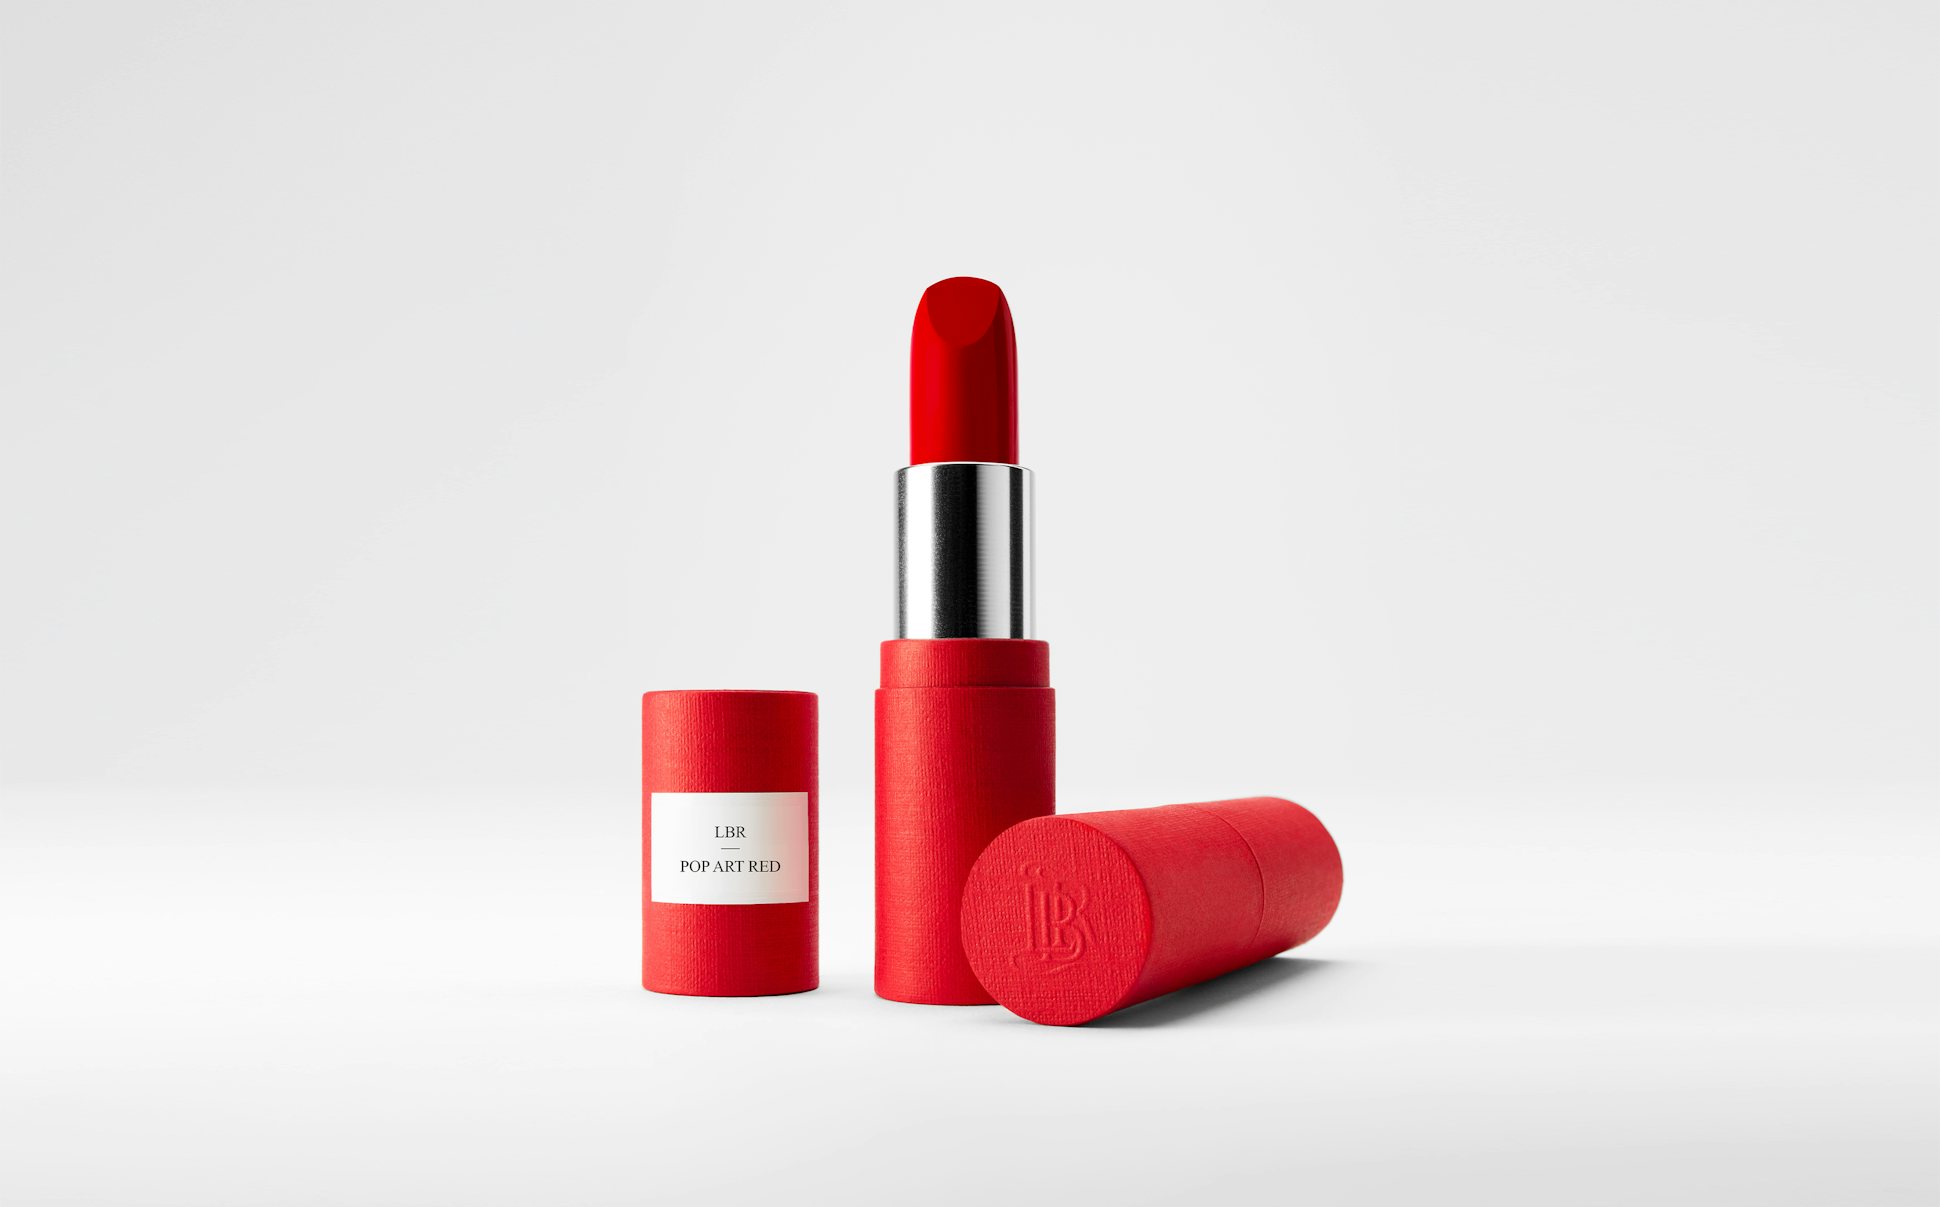 La bouche rouge Pop Art Red lipstick in the red paper case